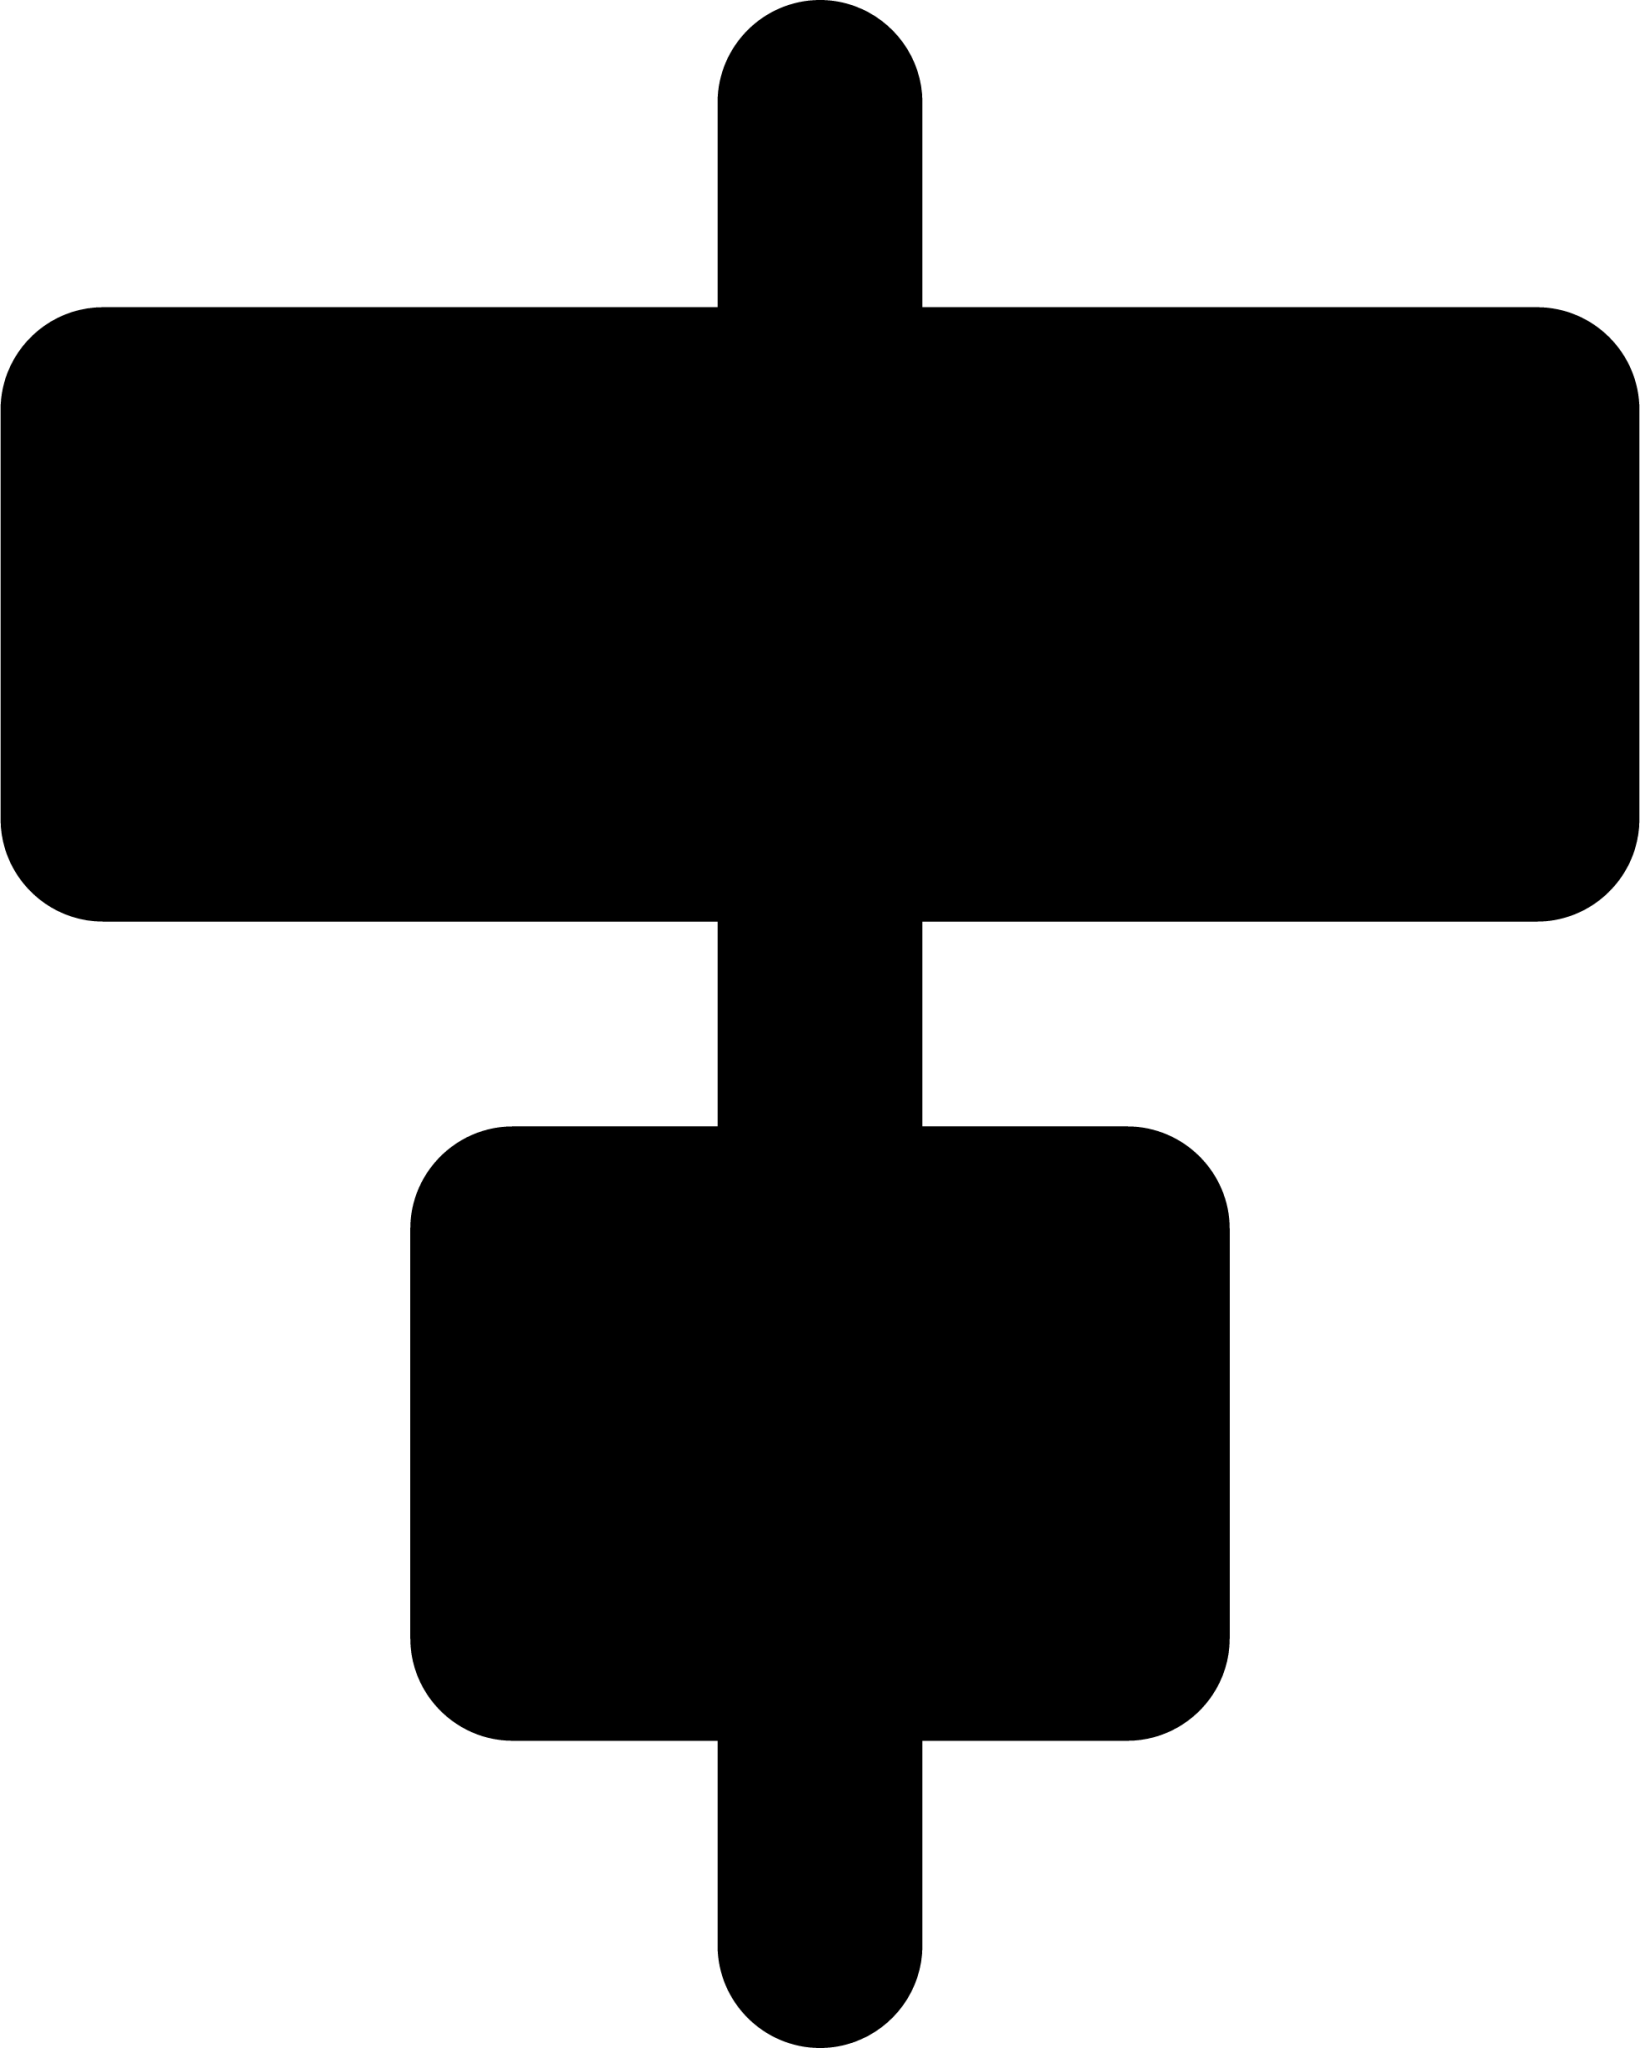 alignment vertical center icon